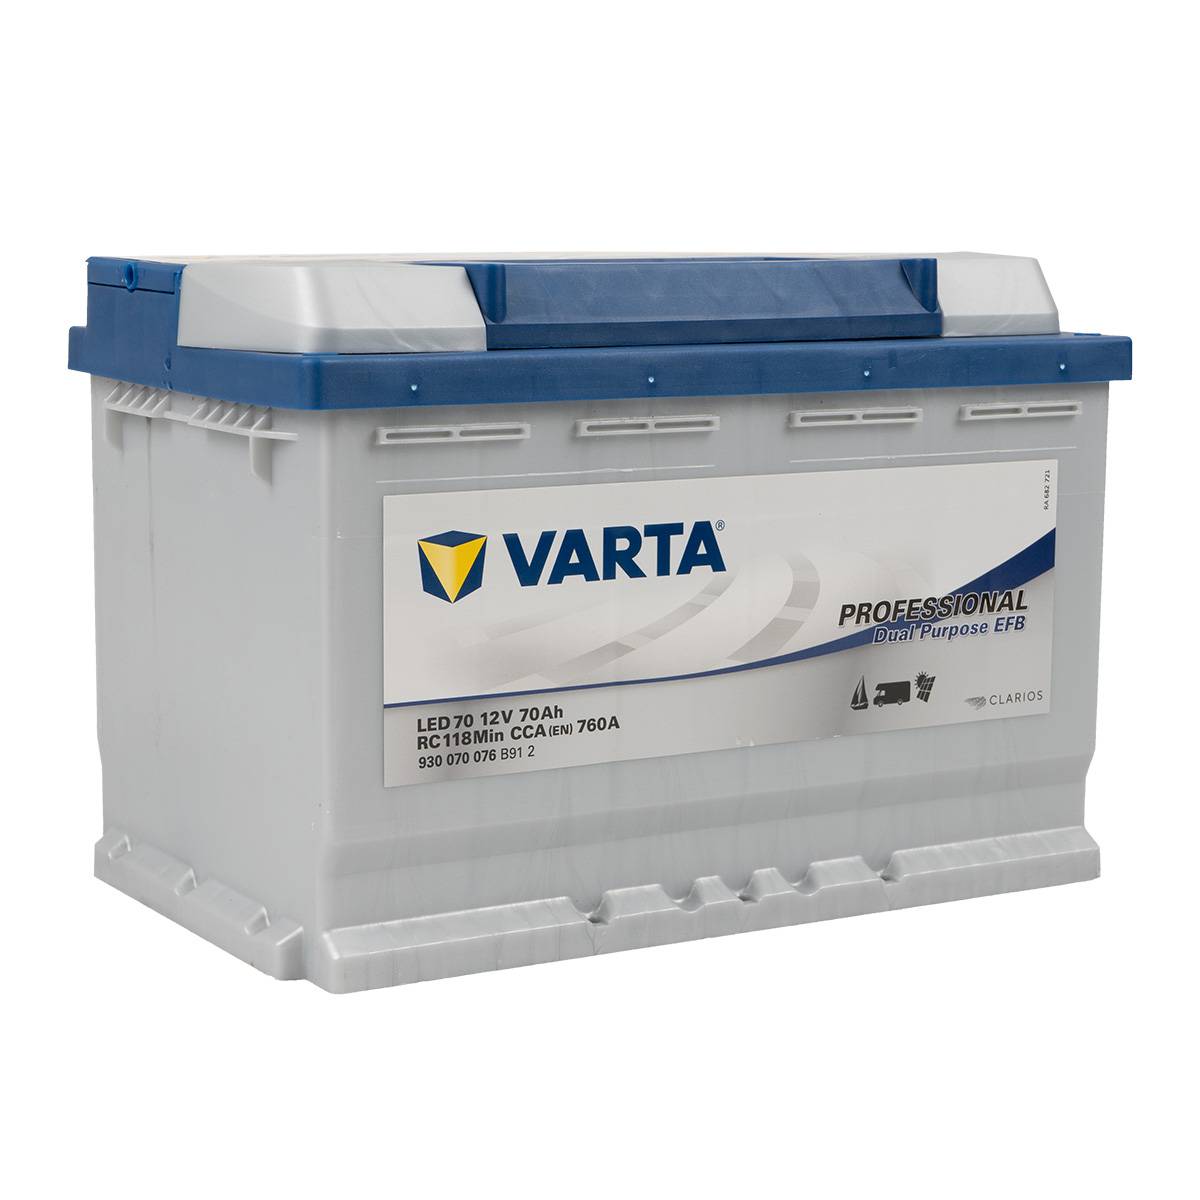 Varta LED70 Professional EFB 12V 70Ah 760A 930 070 076, Versorgungsbatterie, Caravan, Batterien für